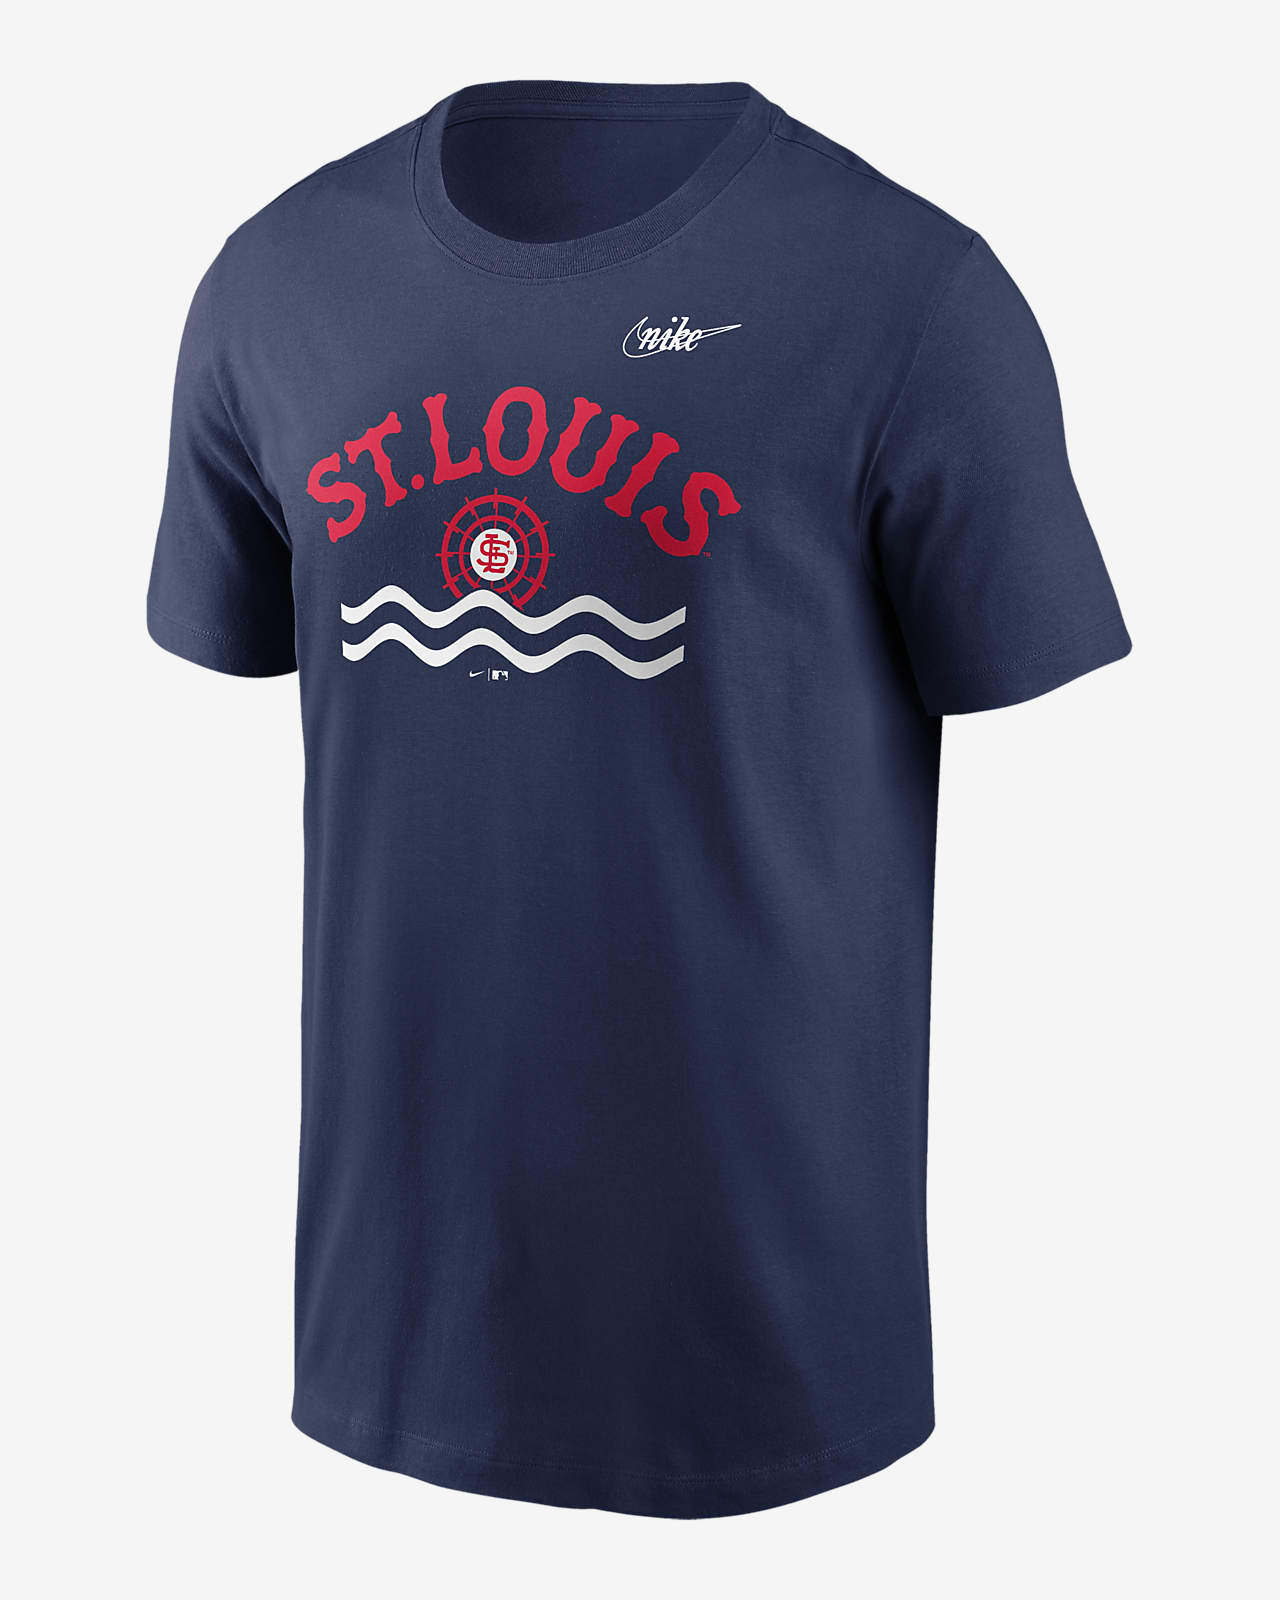 St. Louis Cardinals Nike MLB T-Shirt - Large Grey Cotton